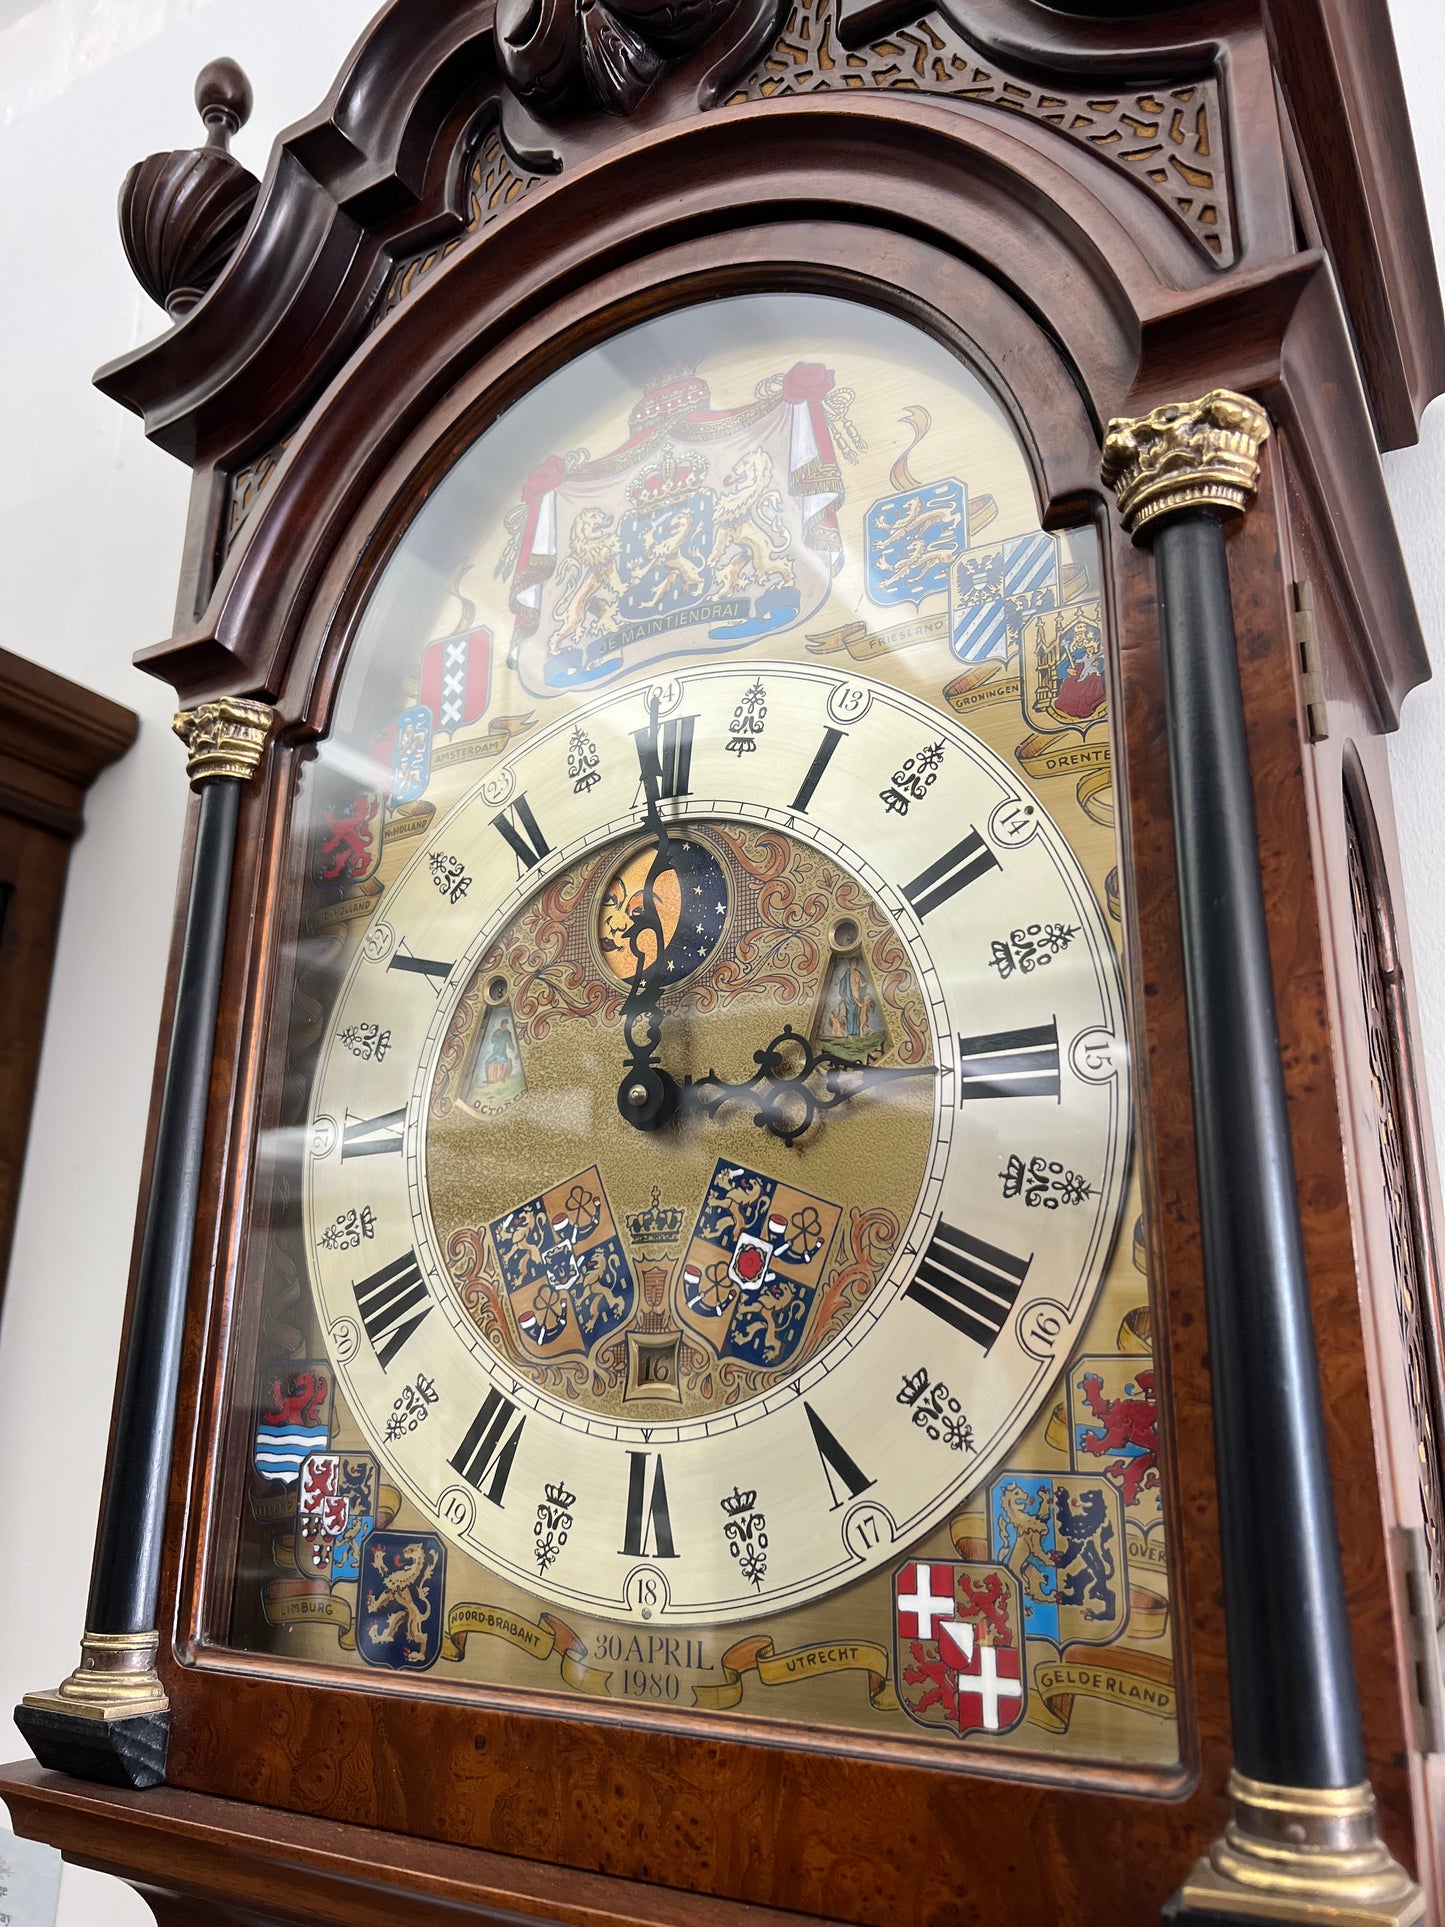 Vintage - Dutch 3 Weight Wall Clock